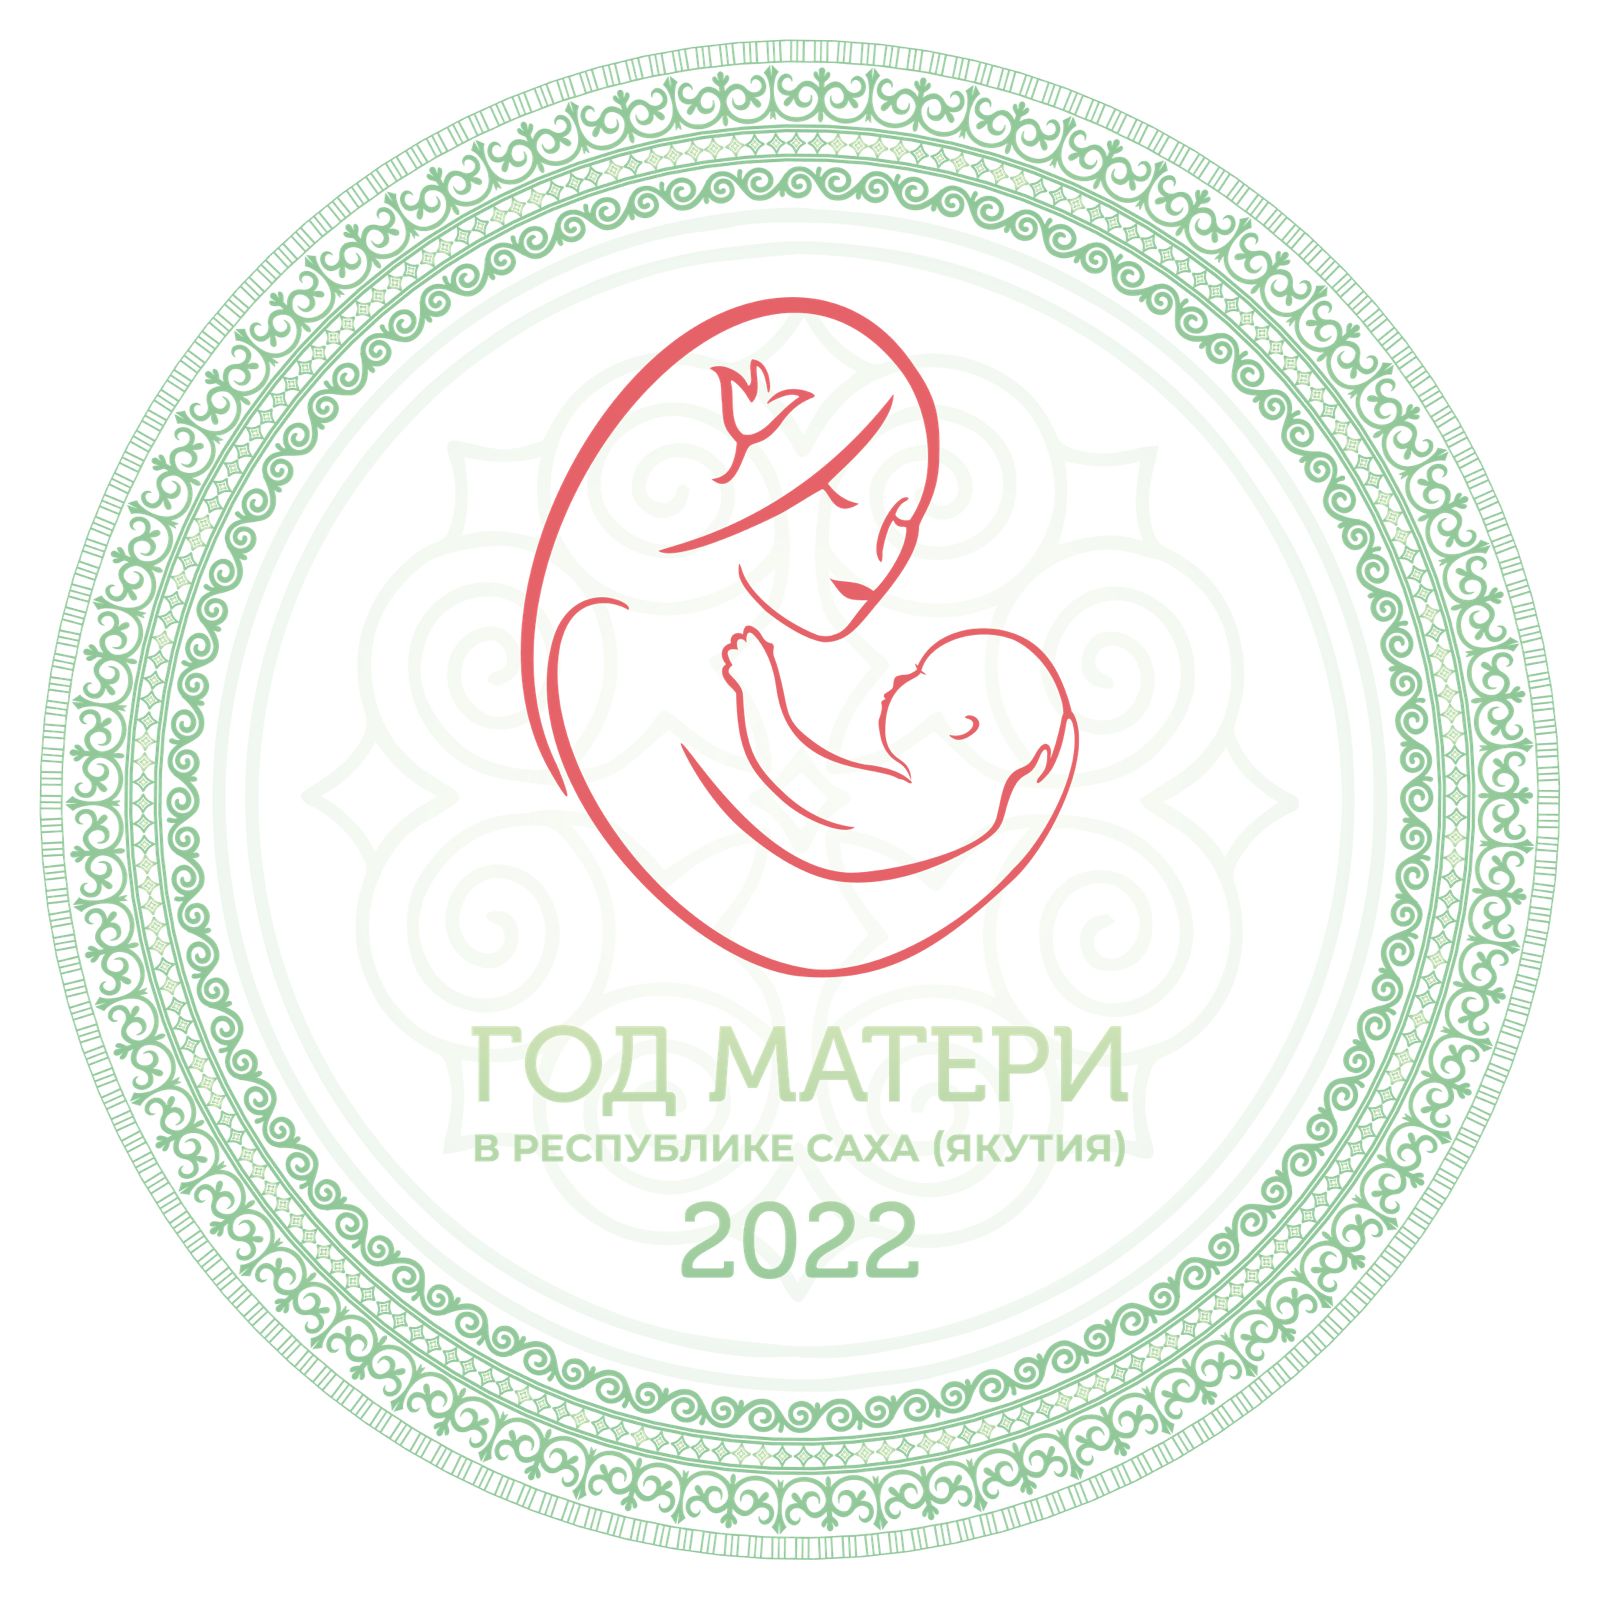 Логотип Года матери утвердили в Якутии